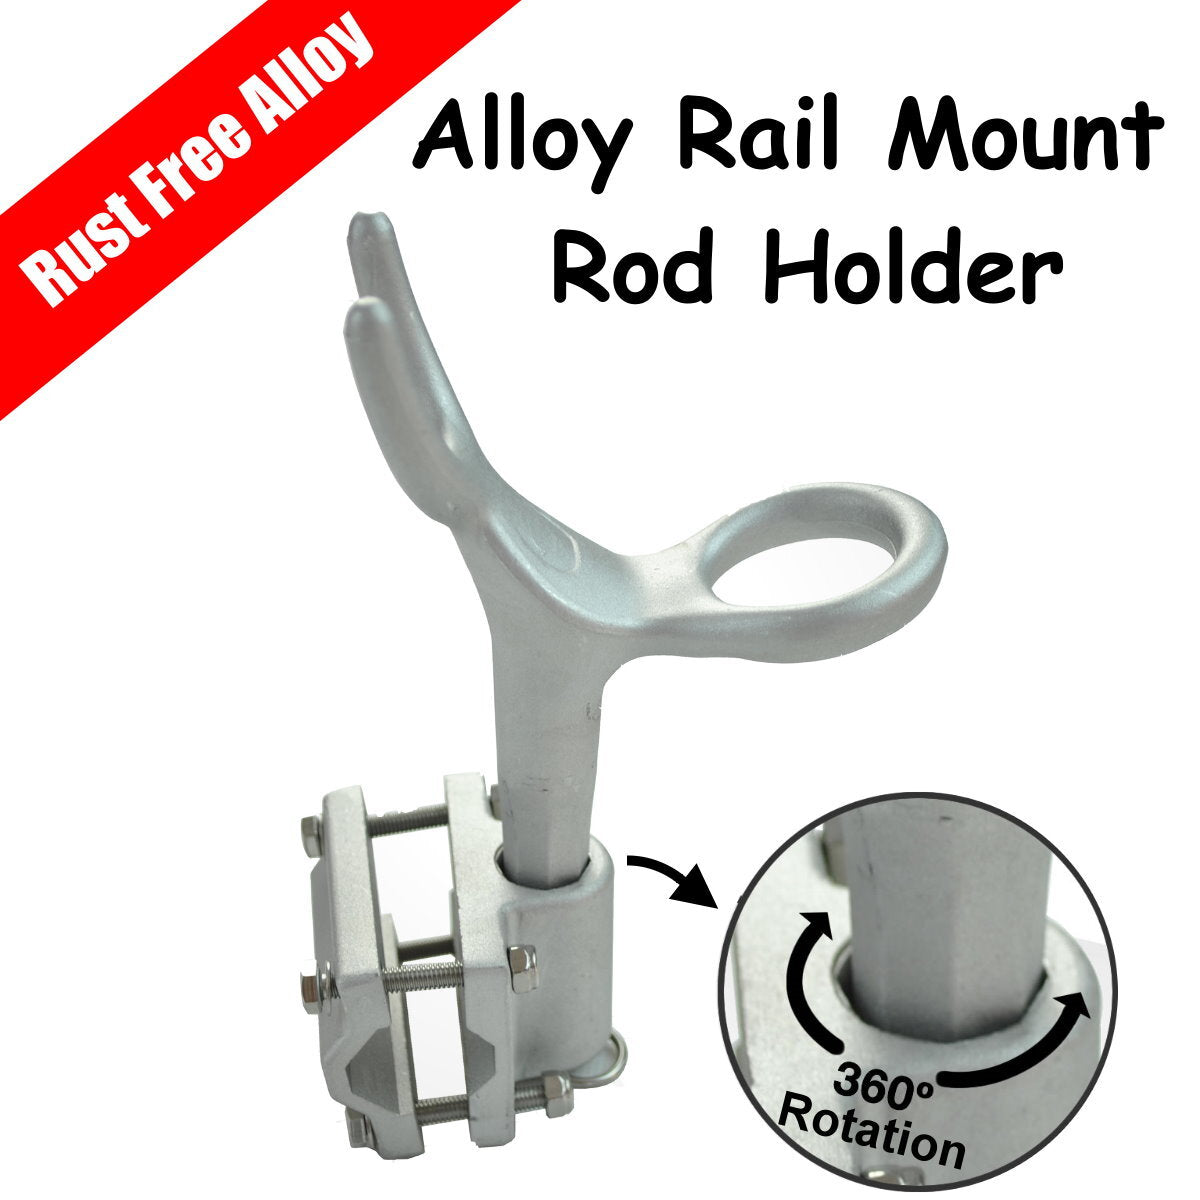 Alloy 360° rotation Adjustable RAIL MOUNT ROD Holder for fishing